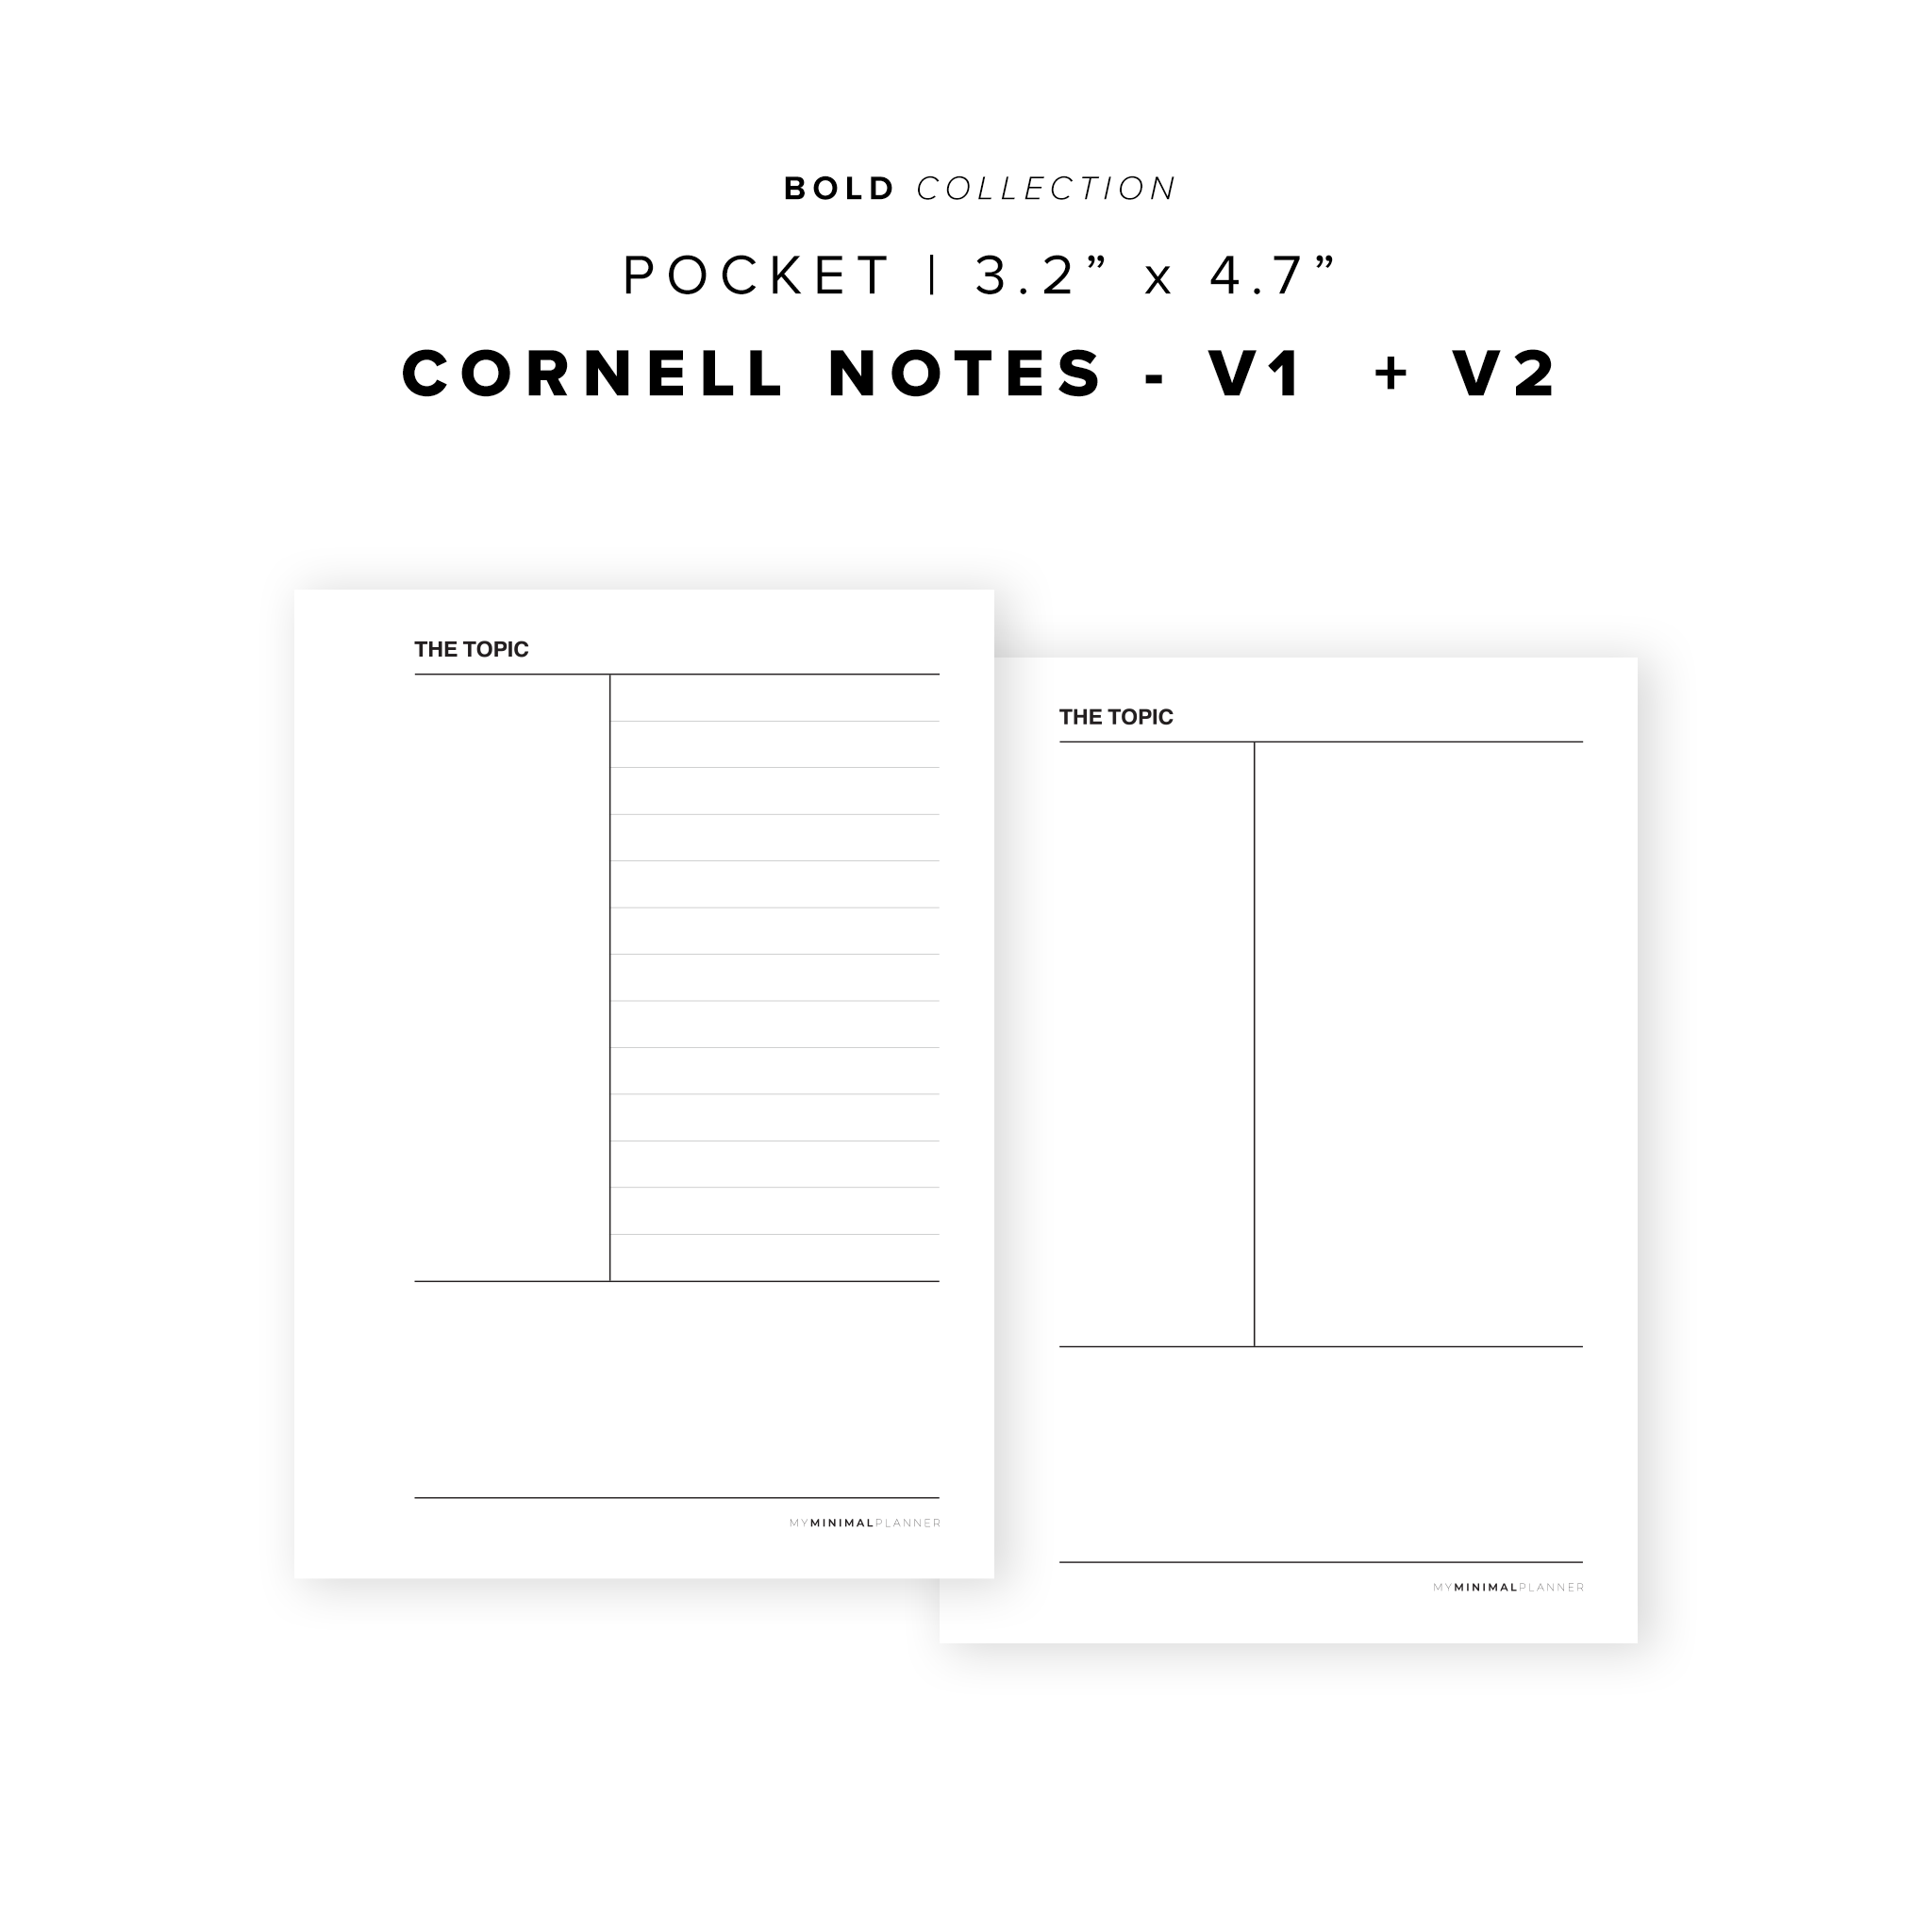 PR103 - Cornell Notes - Printable Insert